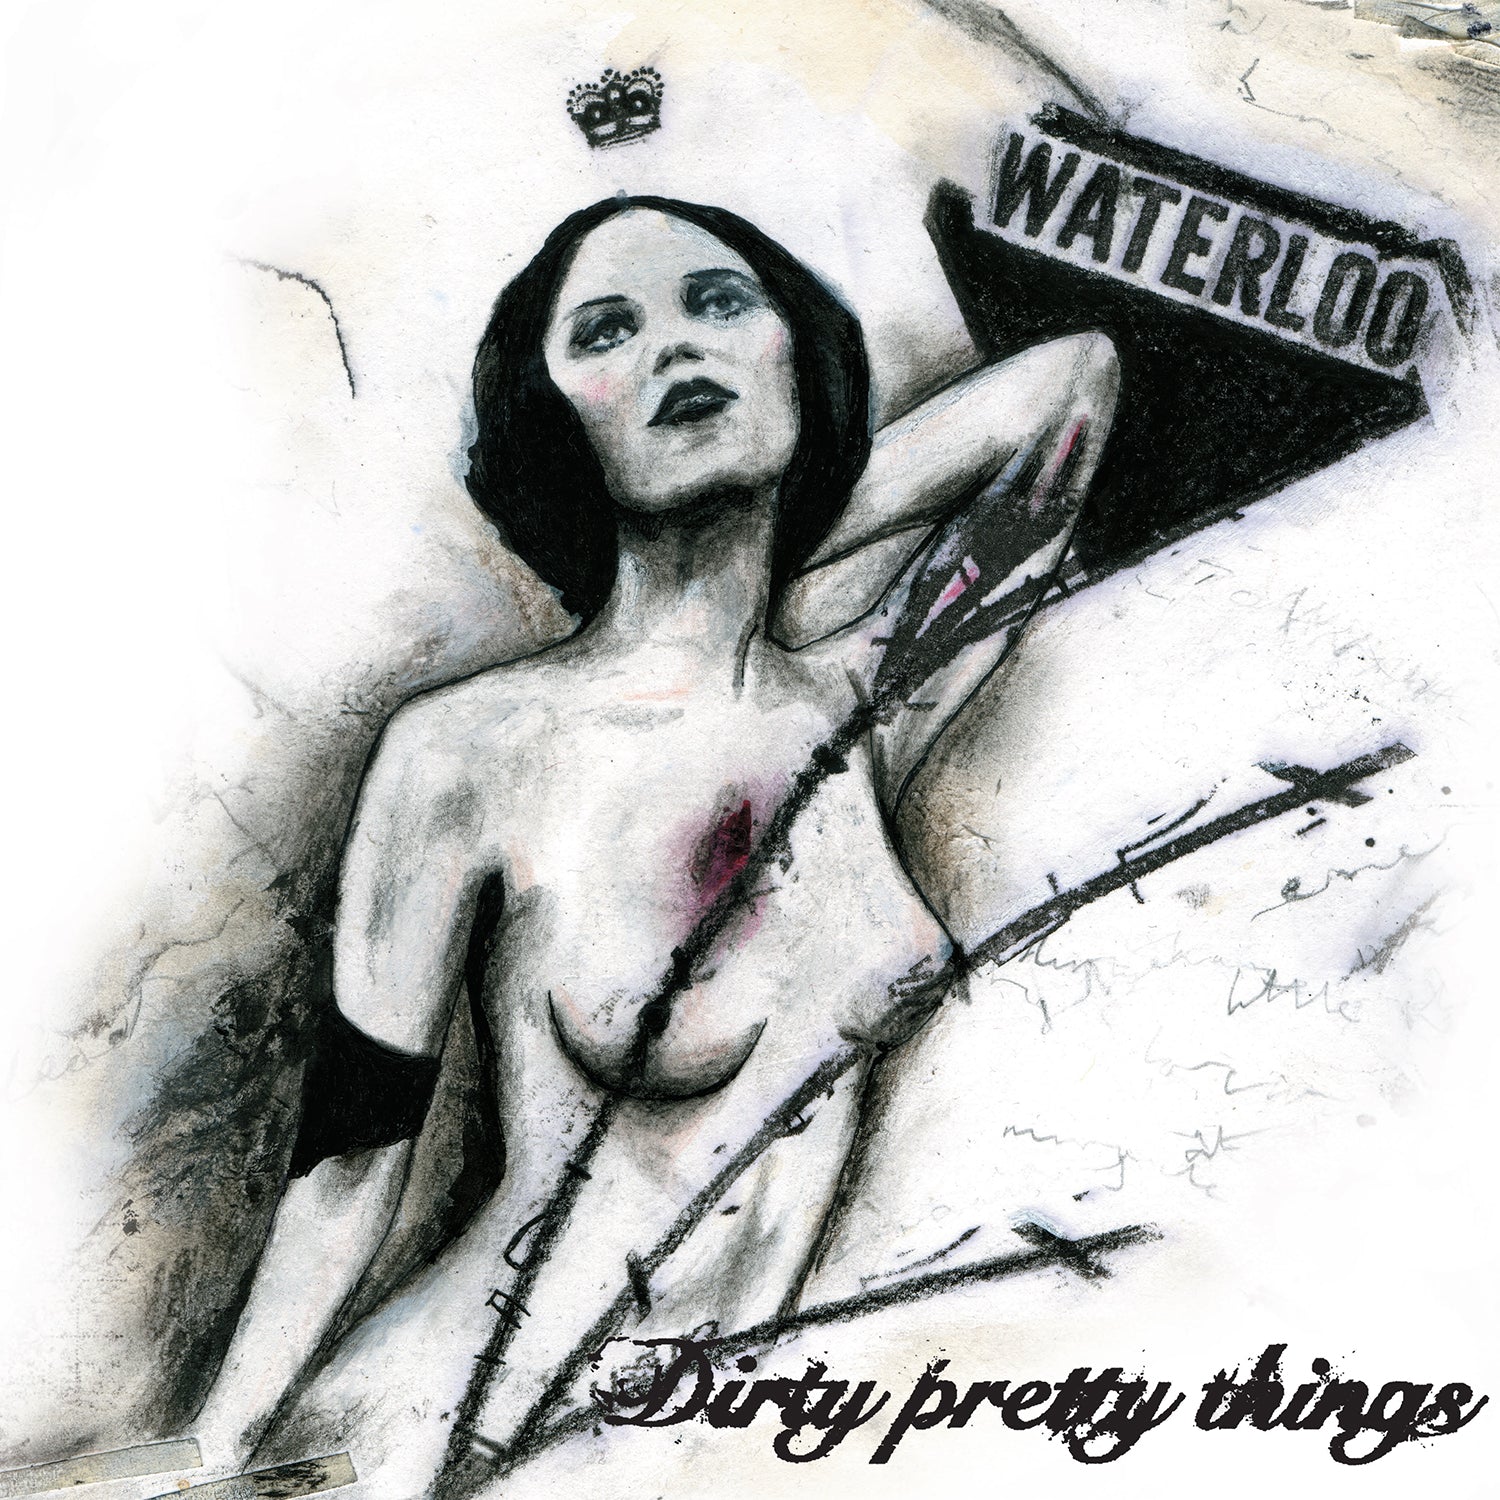 Dirty Pretty Things - Waterloo To Anywhere: Vinyl LP